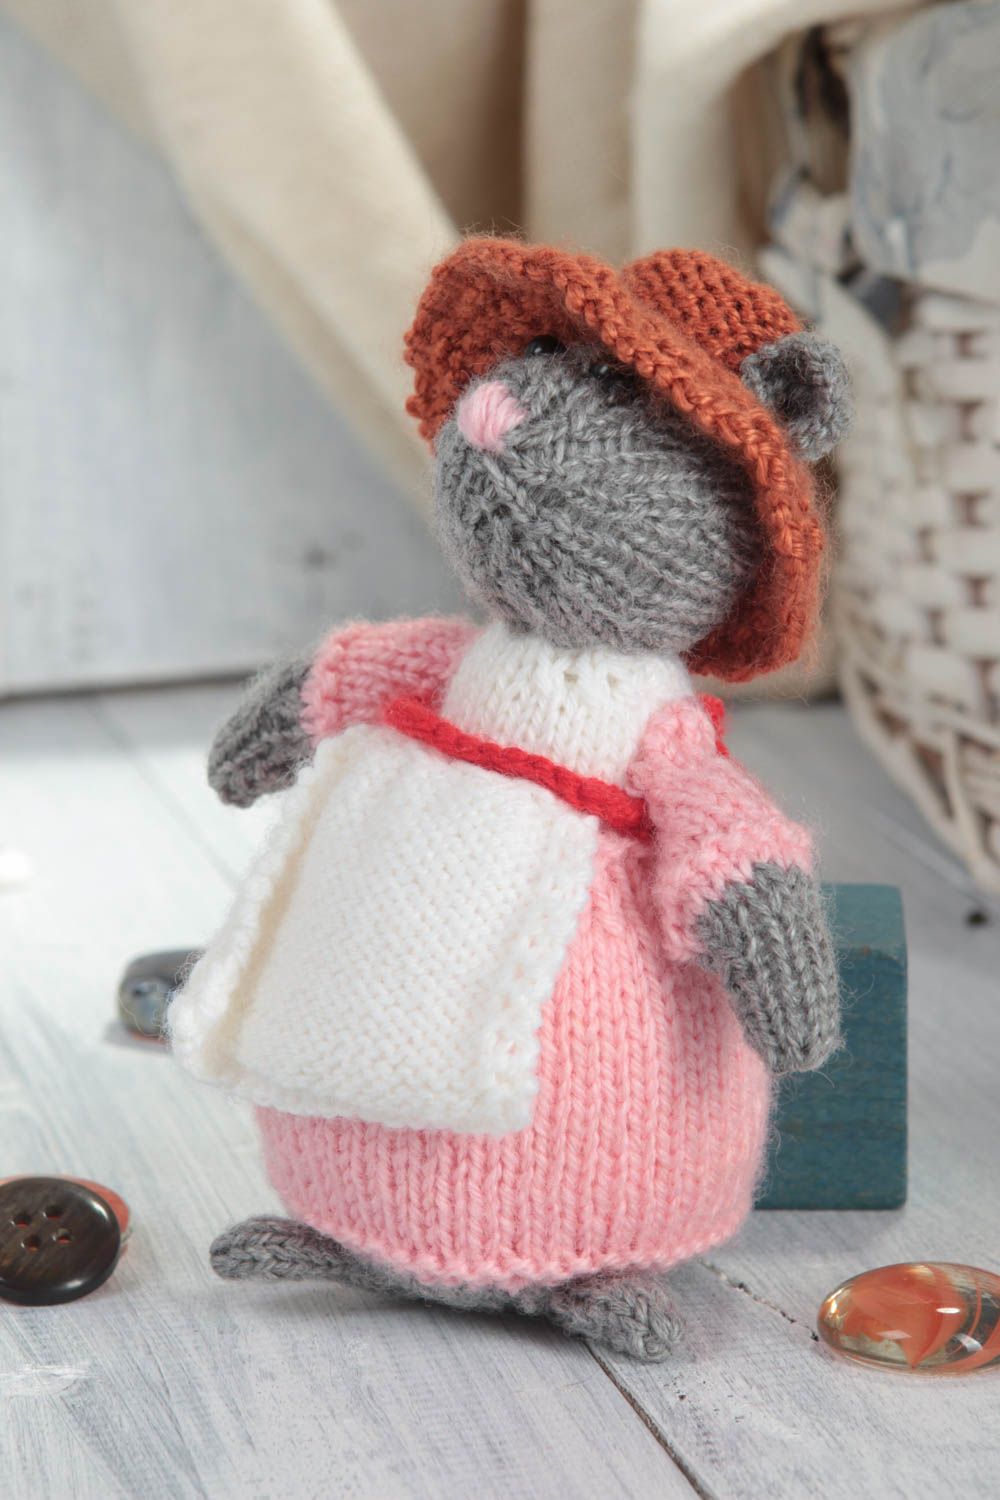 Handmade designer toy knitted soft toy for children decorative toy interior idea photo 1